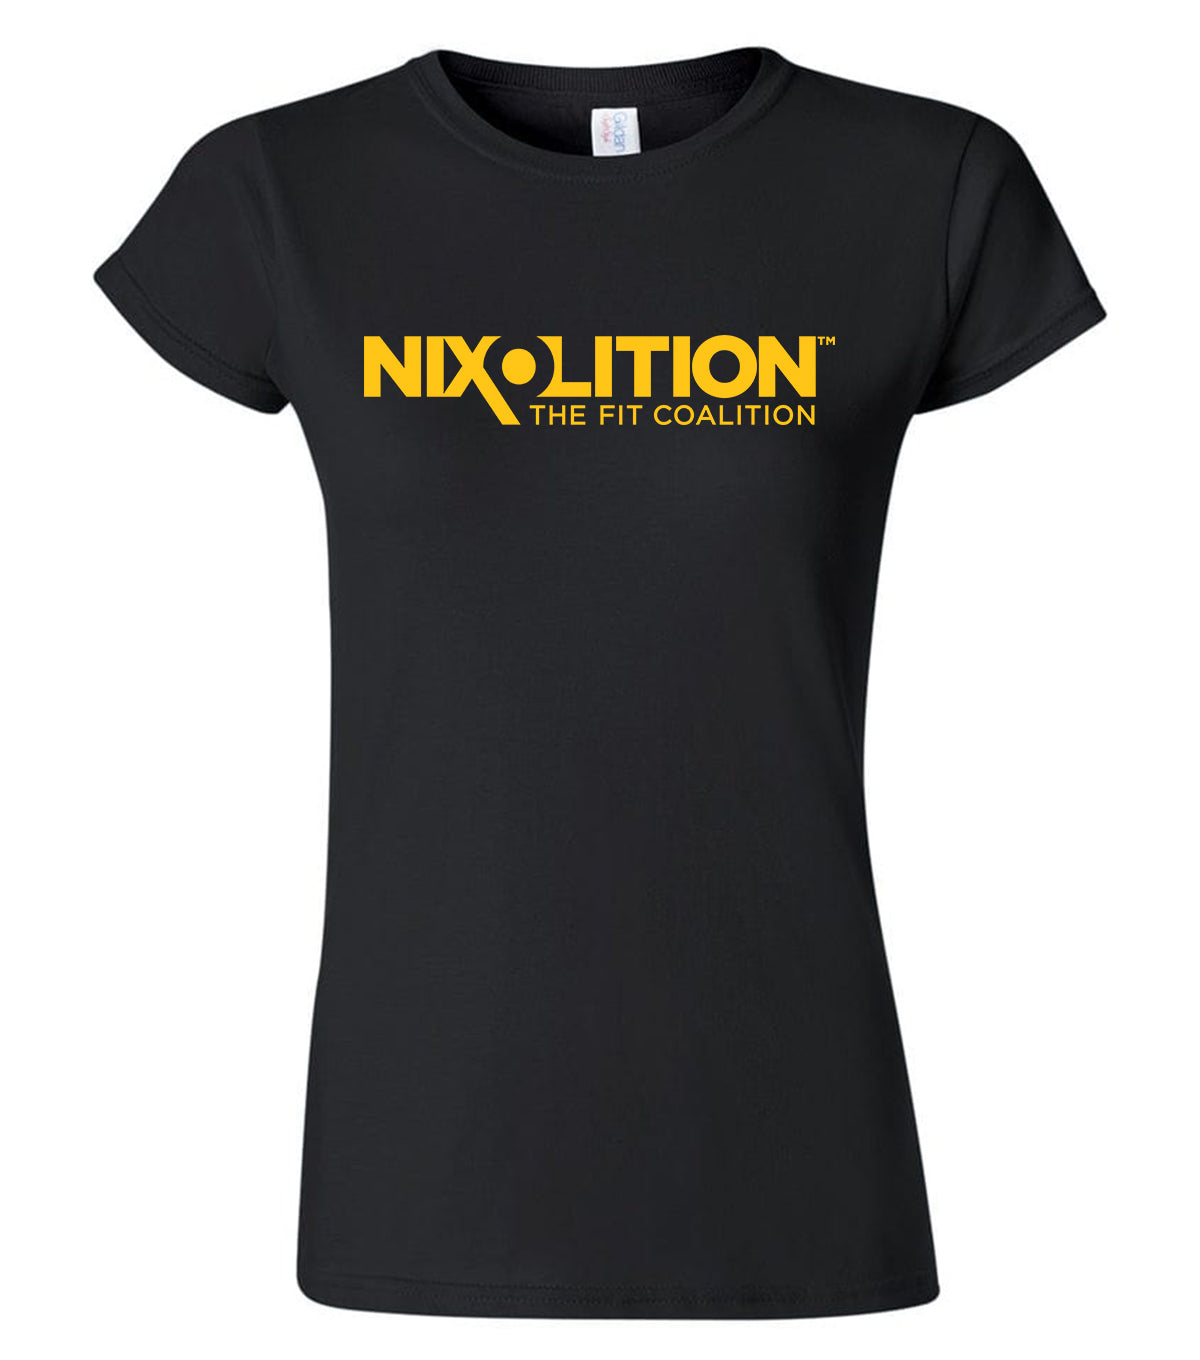 Nixolition T-Shirt  Women's Black